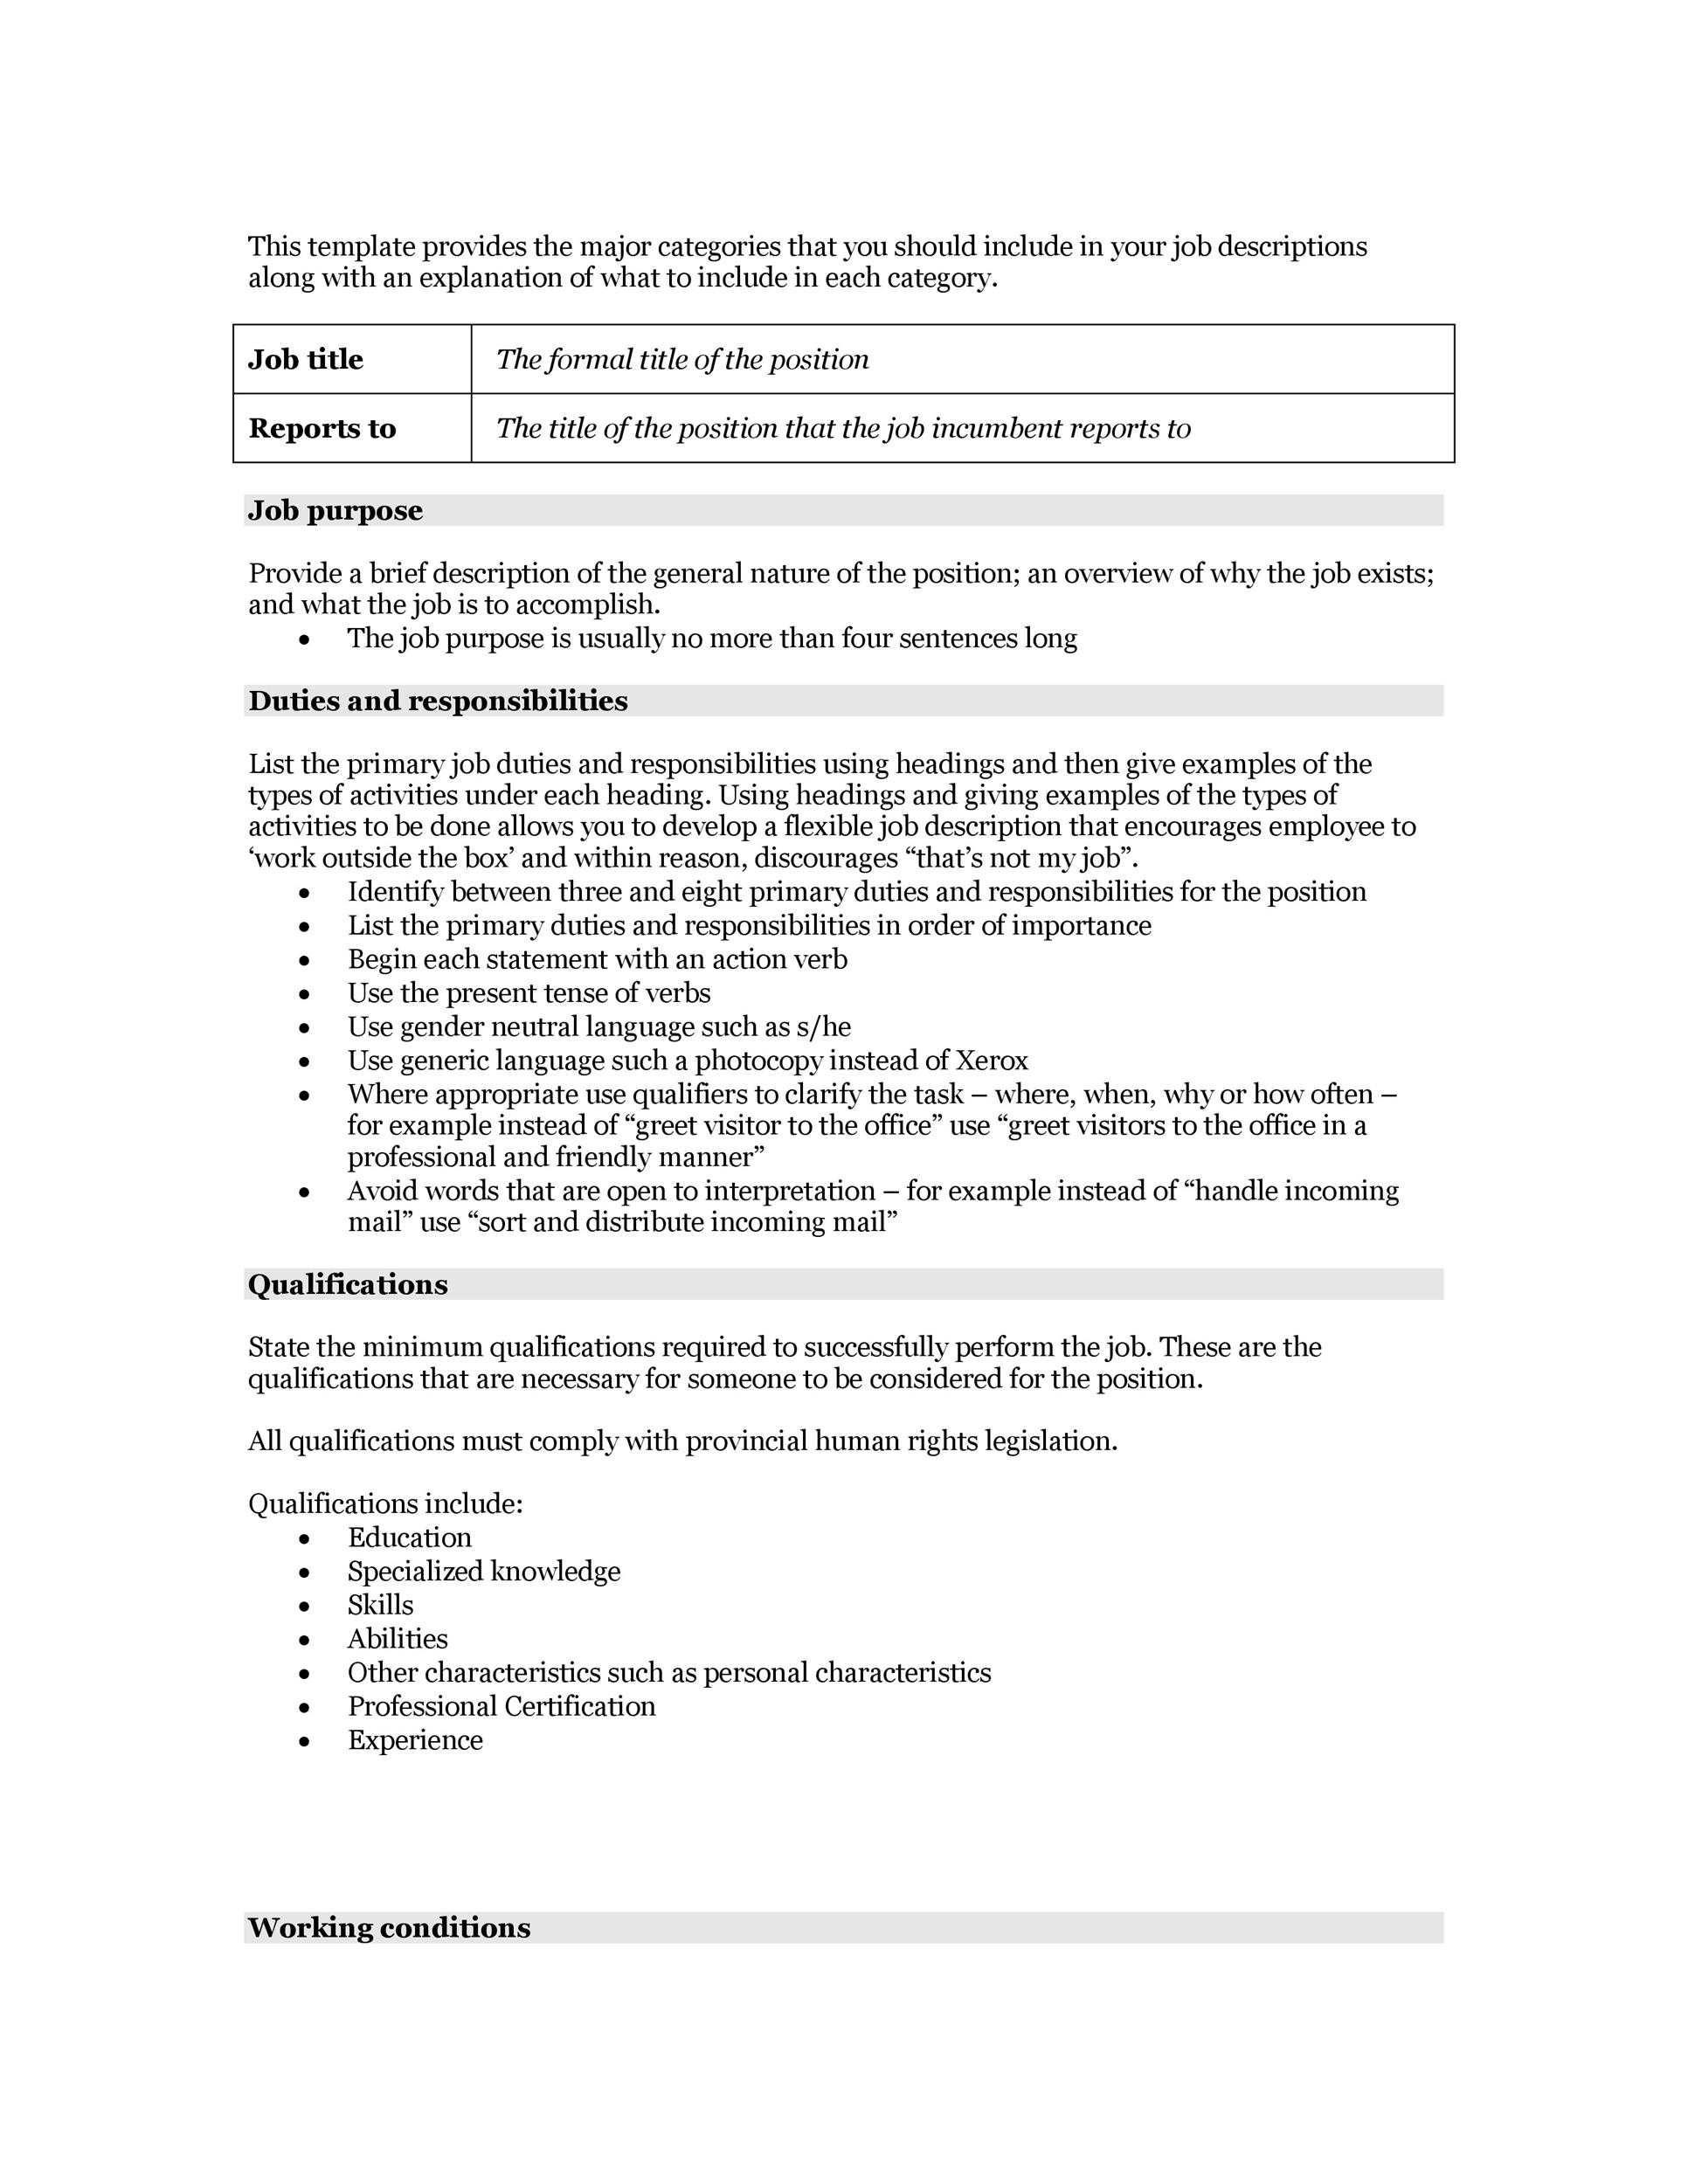 sample job description pearson education